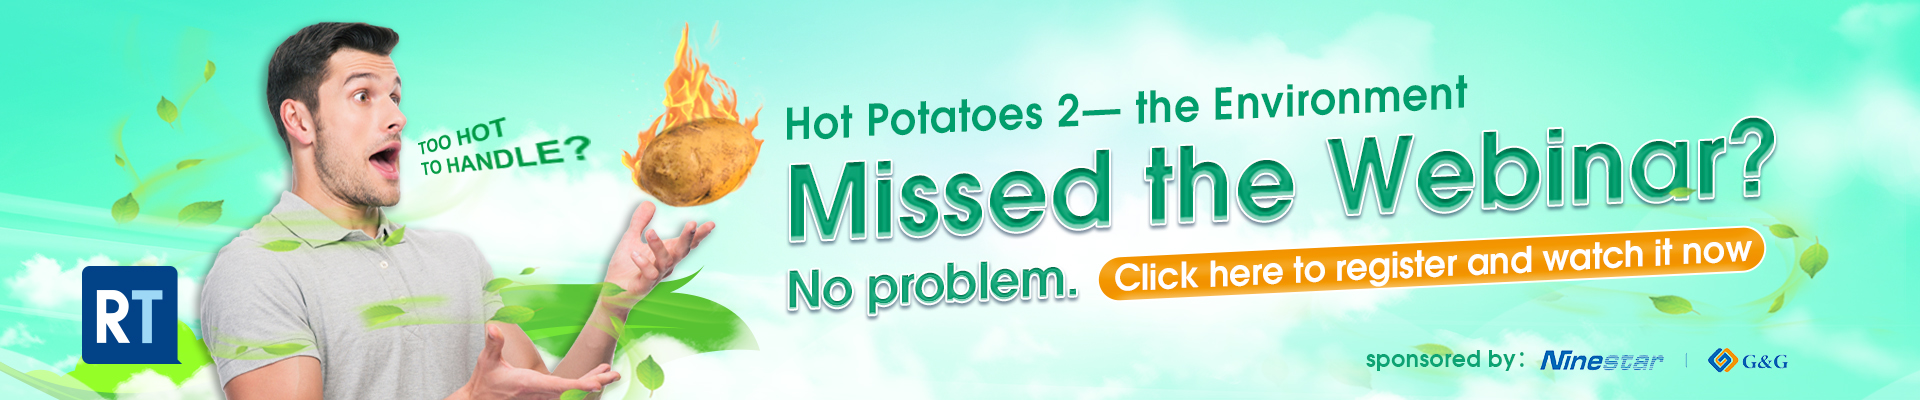 Hot Potatoes 2 Record